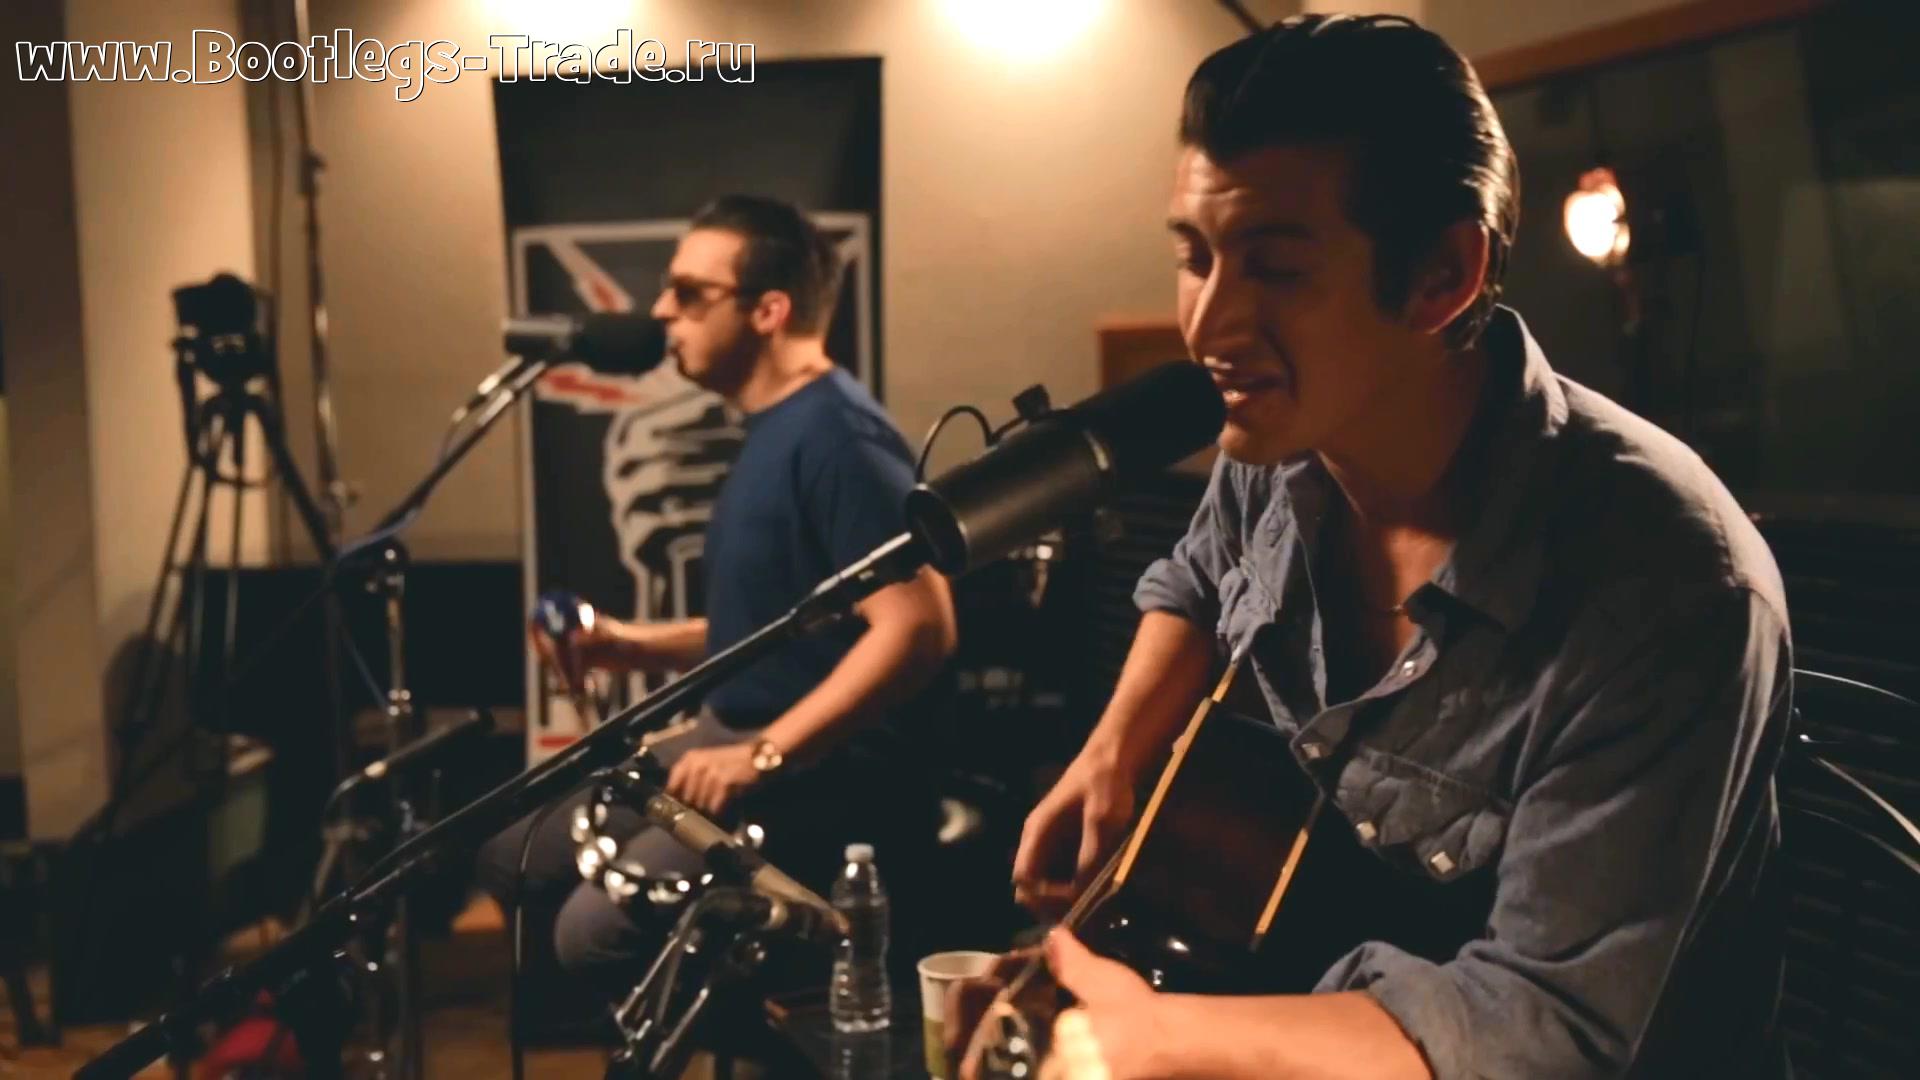 Arctic Monkeys 2014-08-06 KBZT FM 94.9, San Diego, CA, USA (HD 1080)